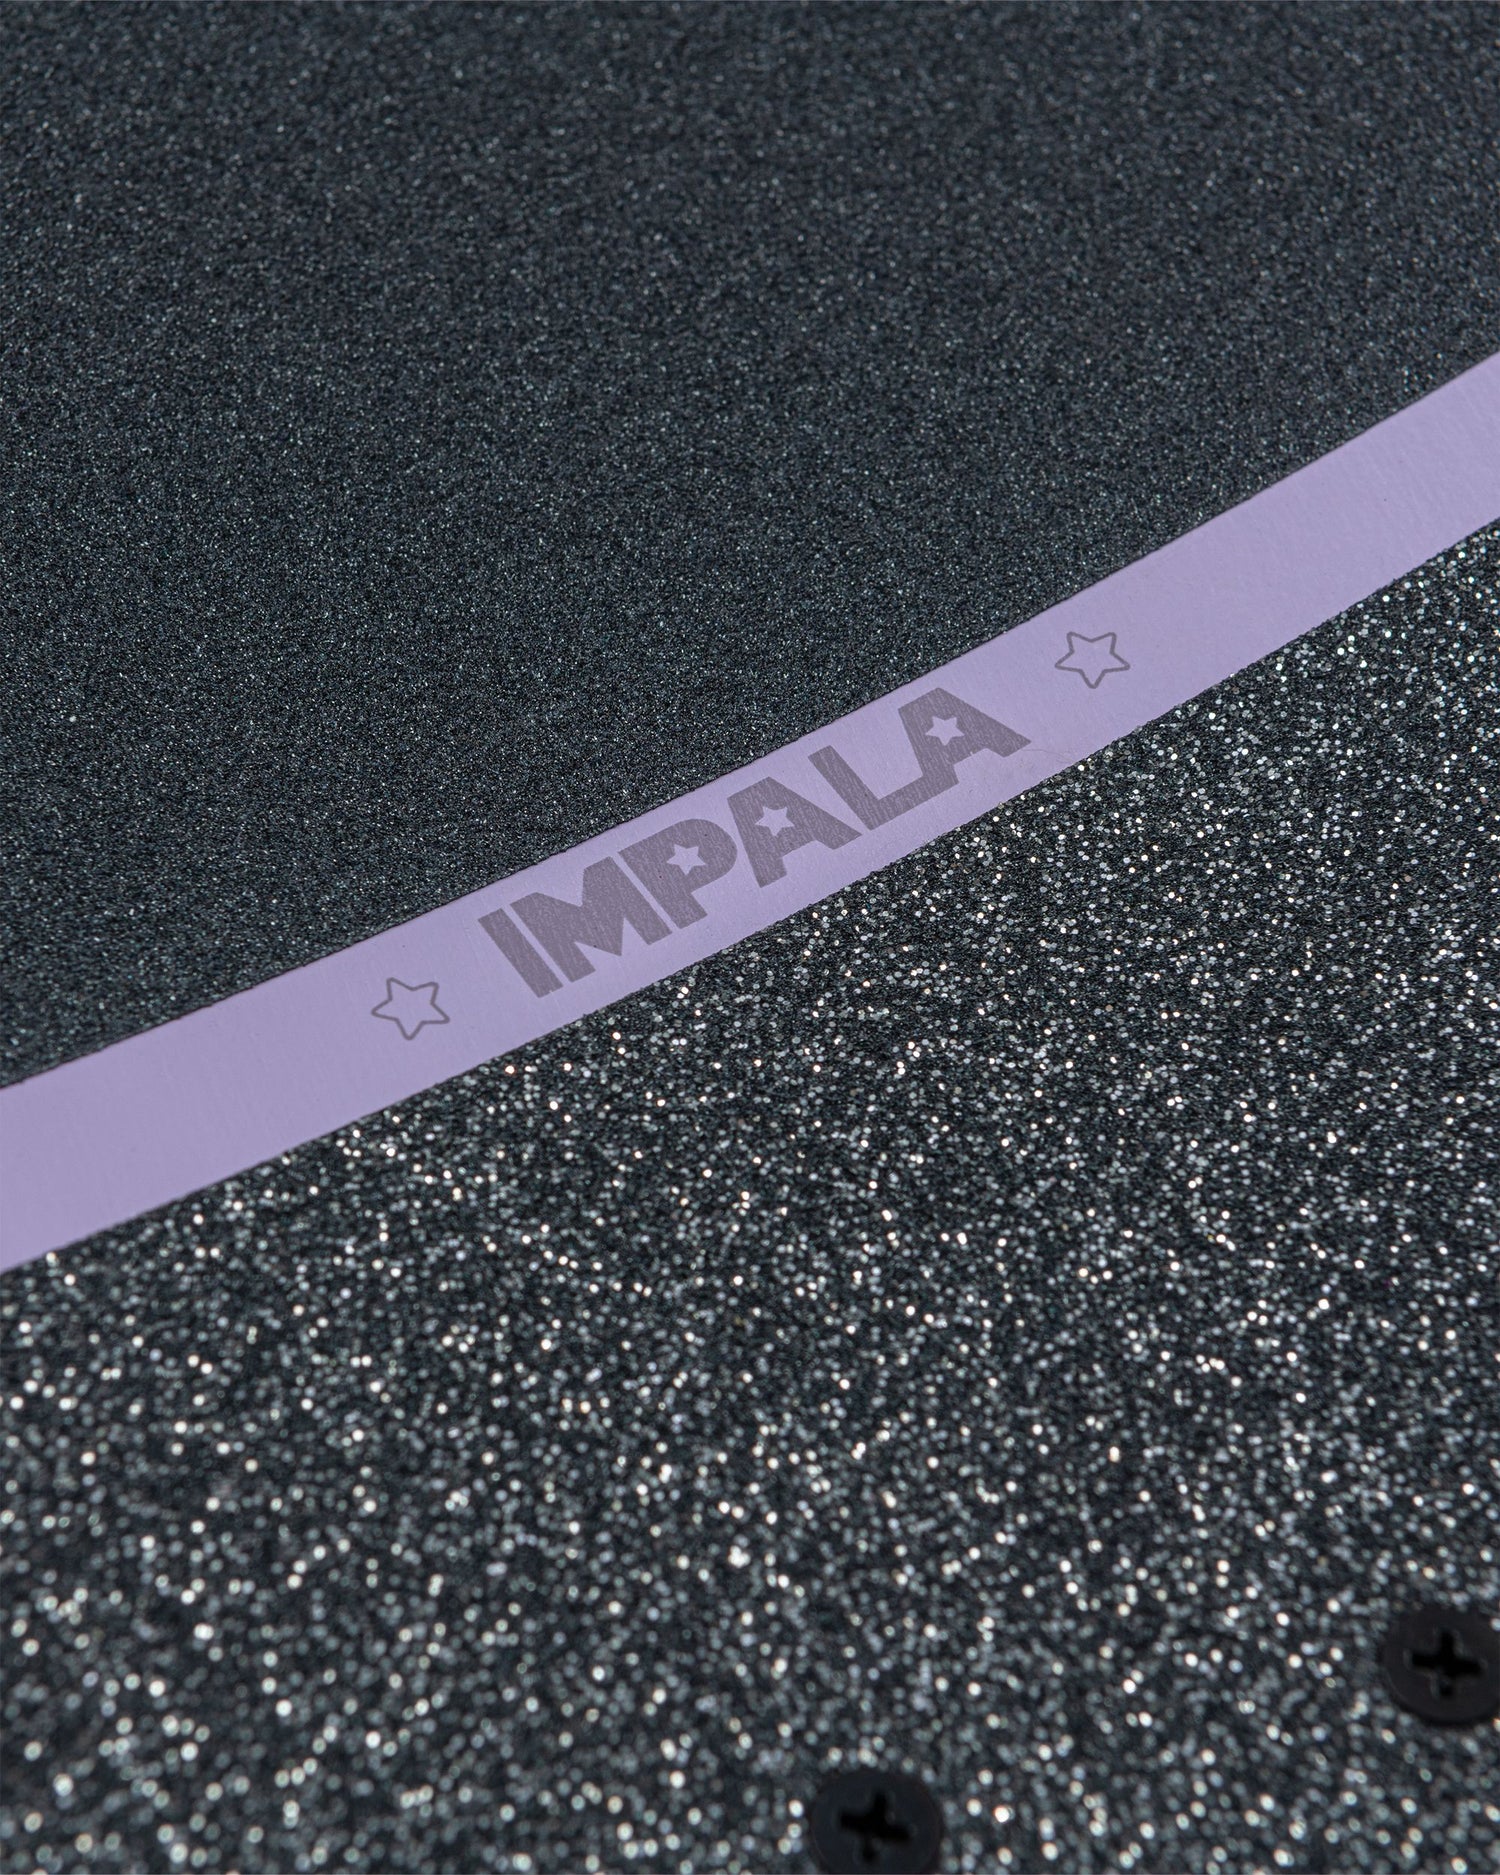 Grip tape detailing of Impala Cosmos Skateboard - Purple